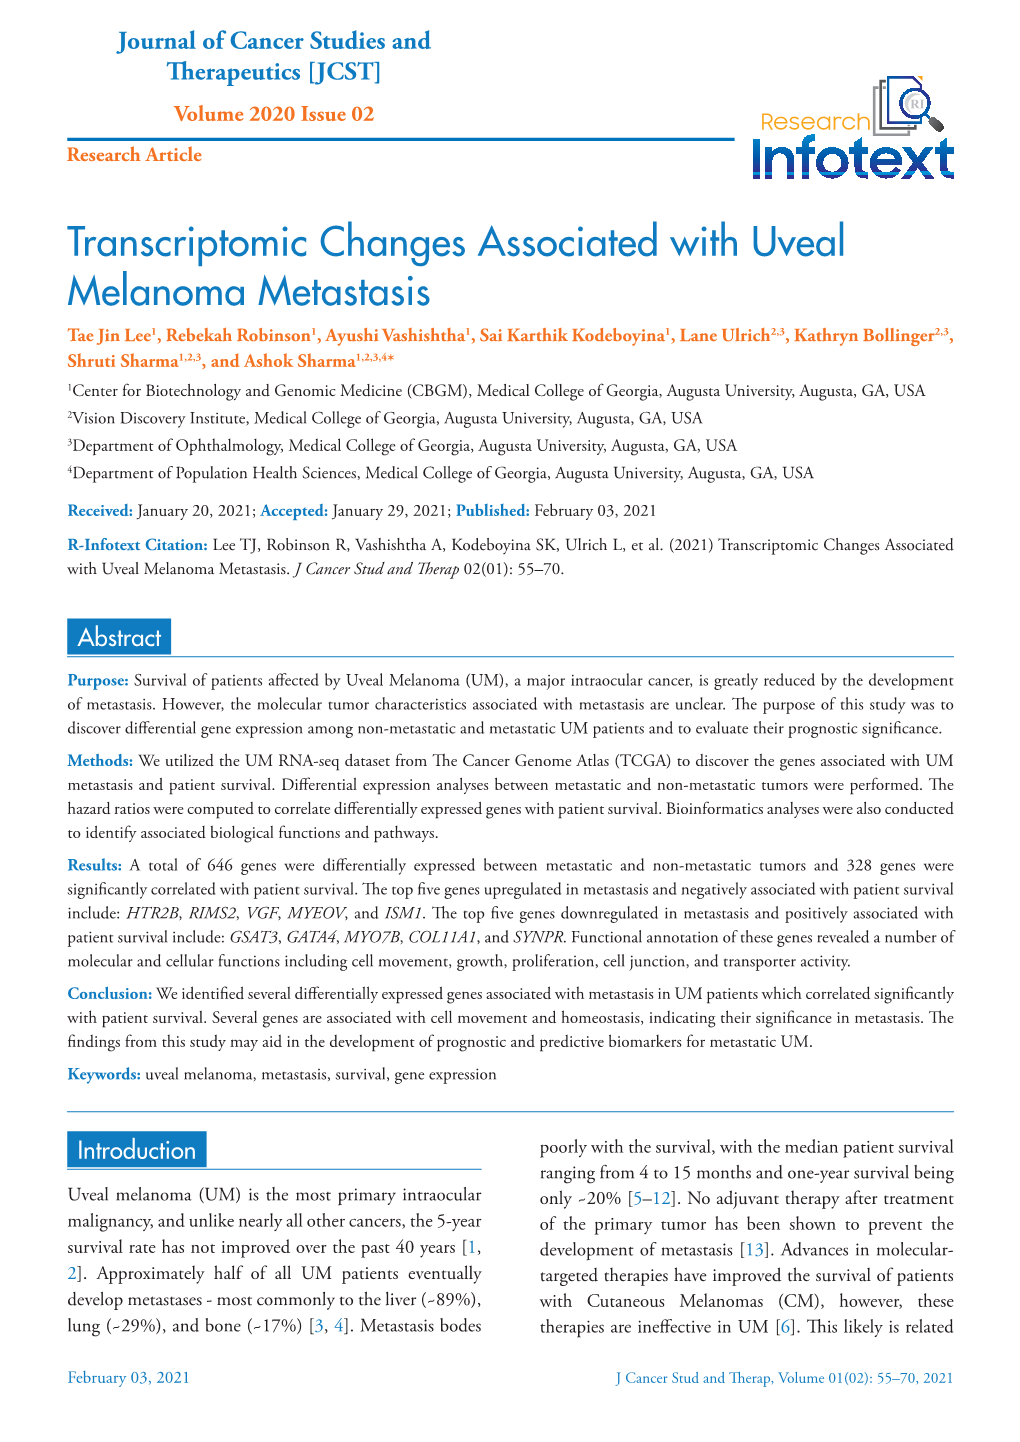 Transcriptomic Changes Associated with Uveal Melanoma Metastasis